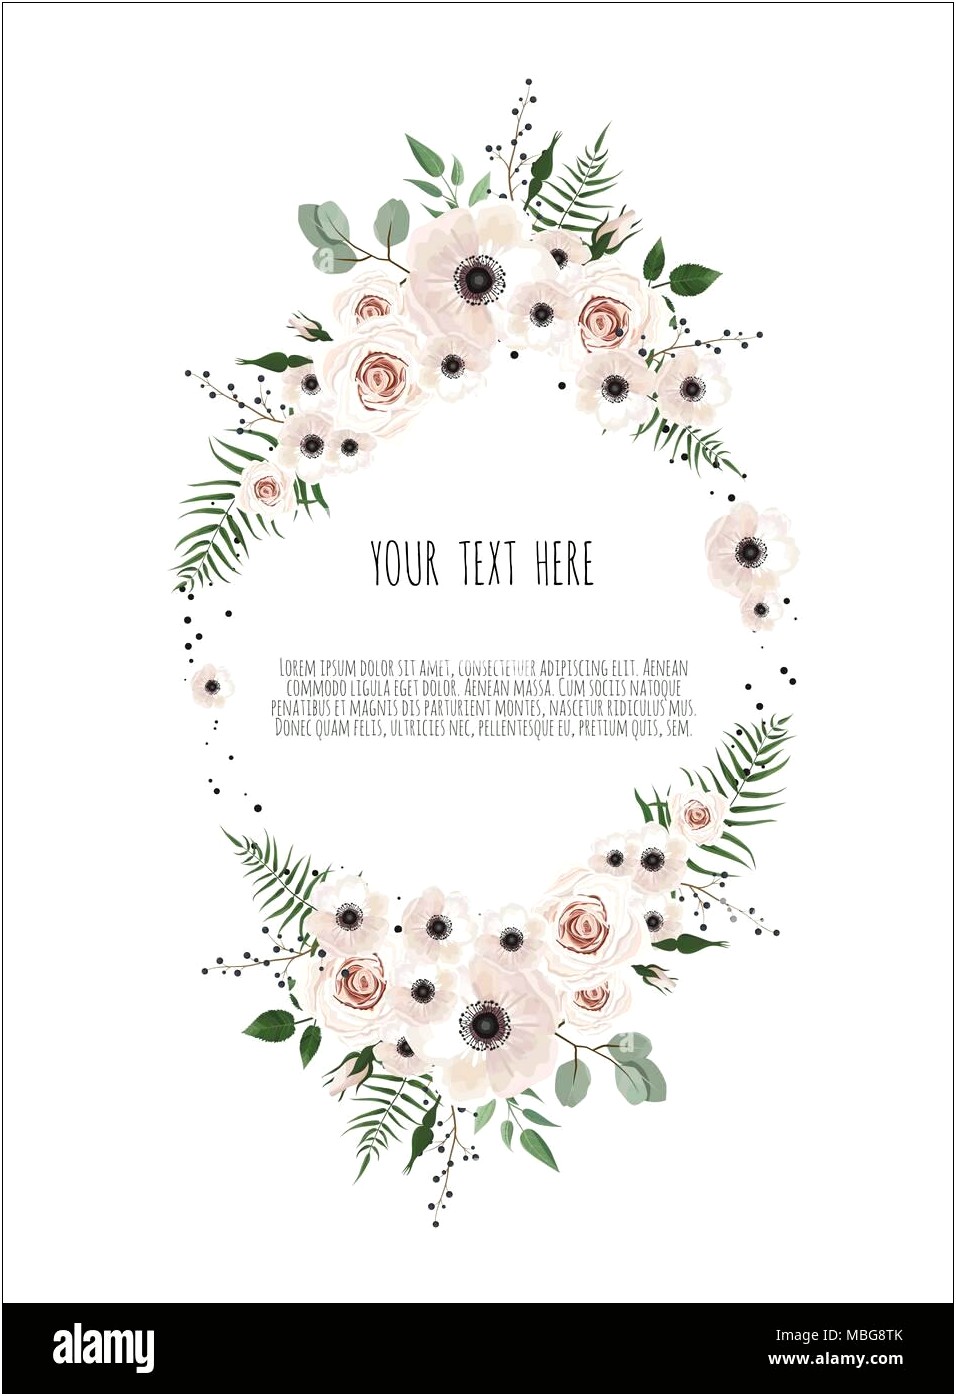 Free Romantic Floral Design Border Word Template